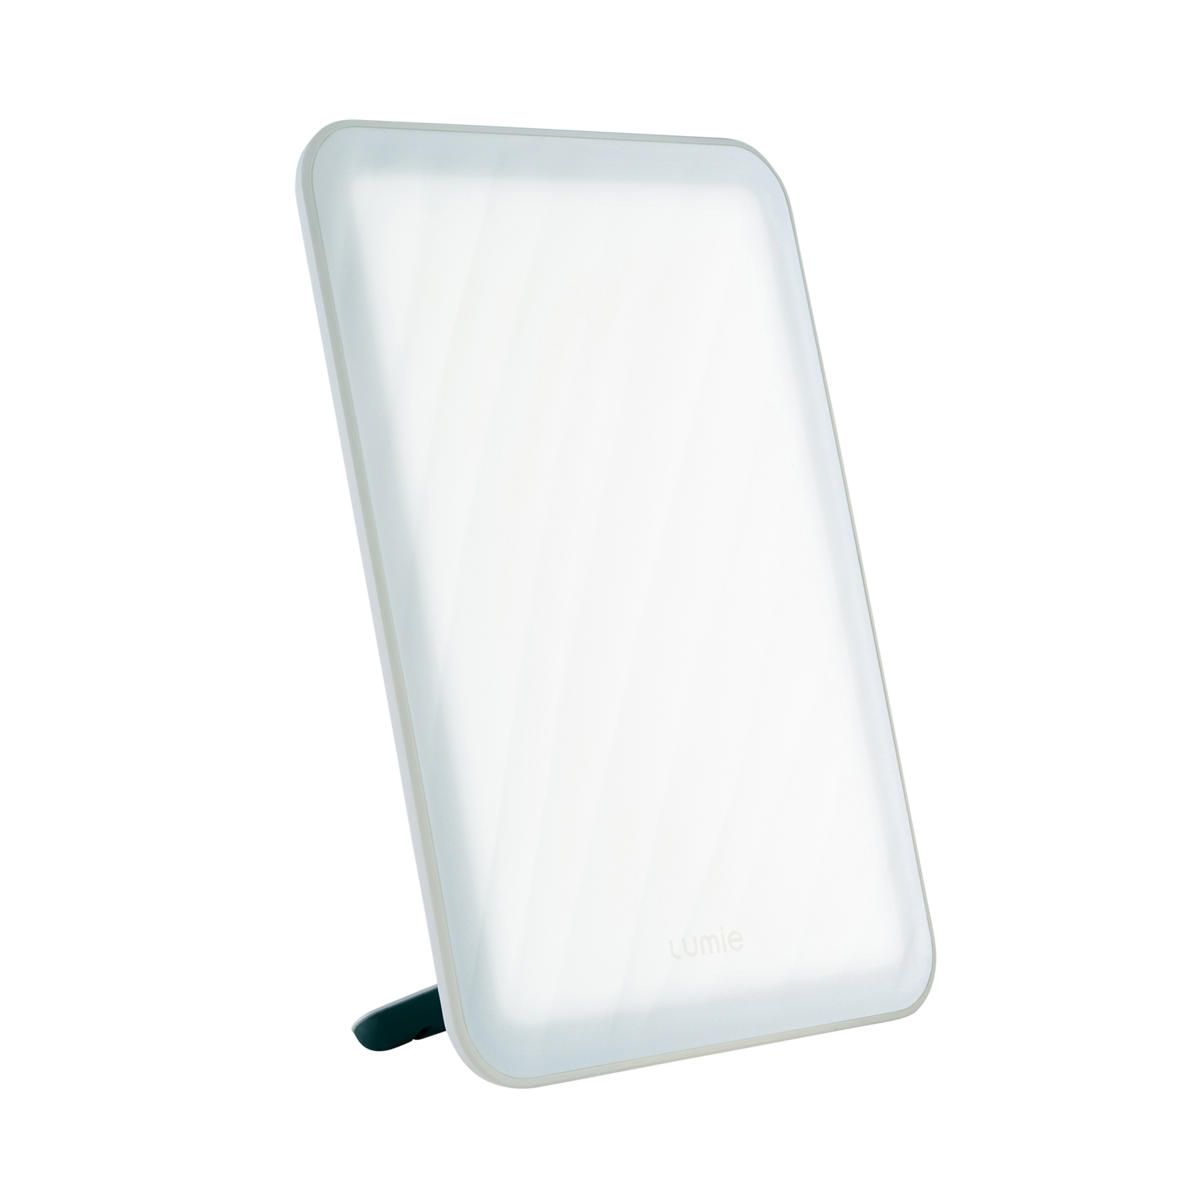 Lumie® Vitamin L Slim Portable SAD Lamp for Light Therapy